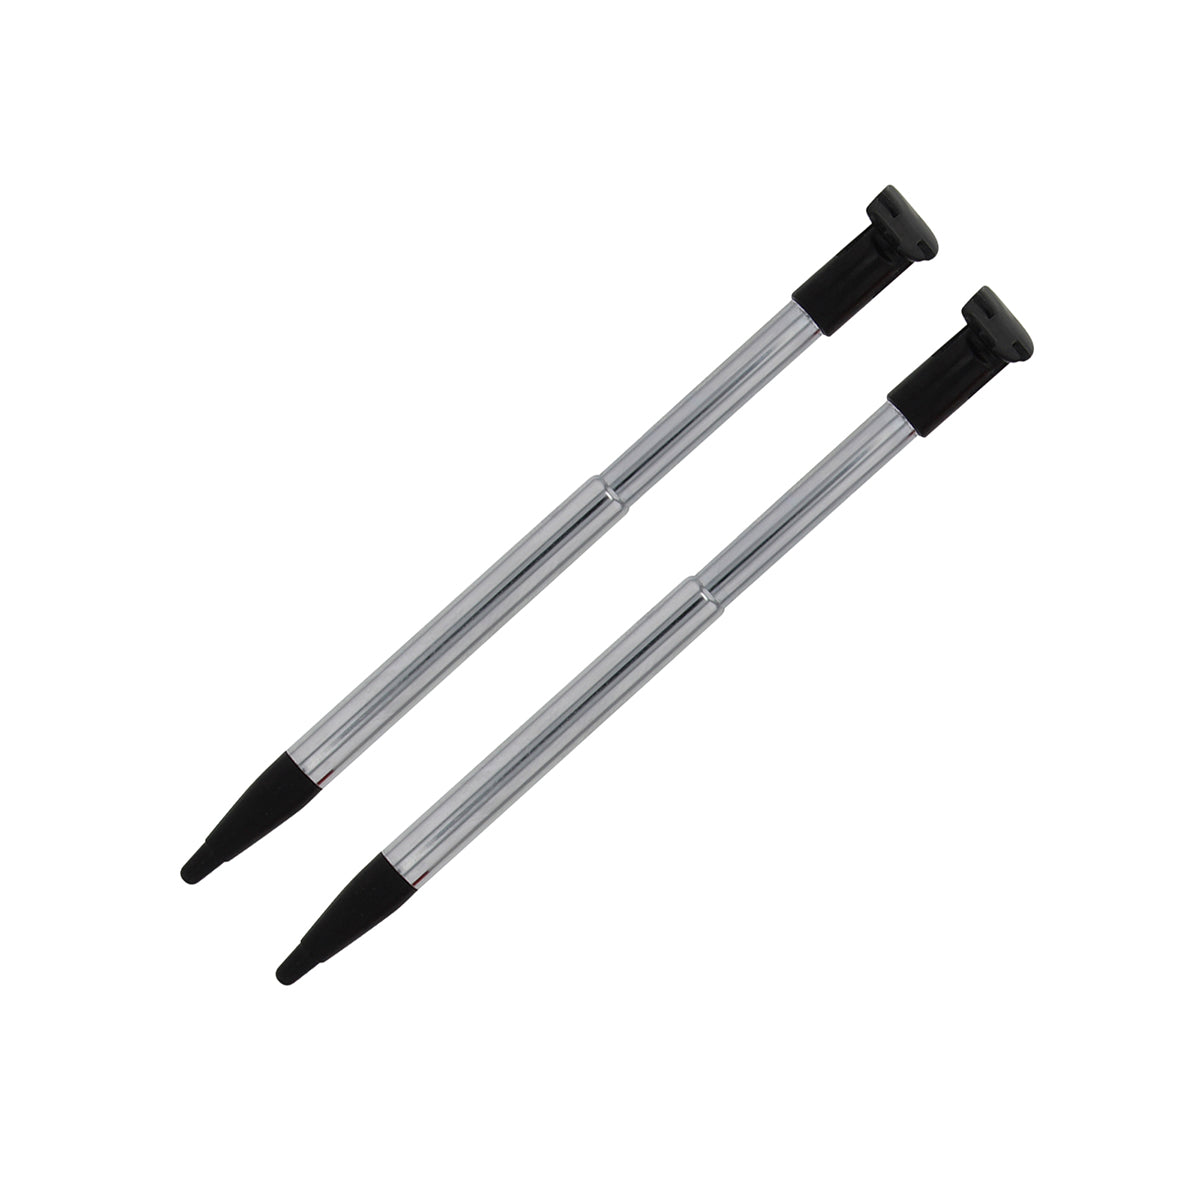 for Nintendo NEW 2DS XL - 2 Black Metal Retractable Extendable Stylus Pens FPC